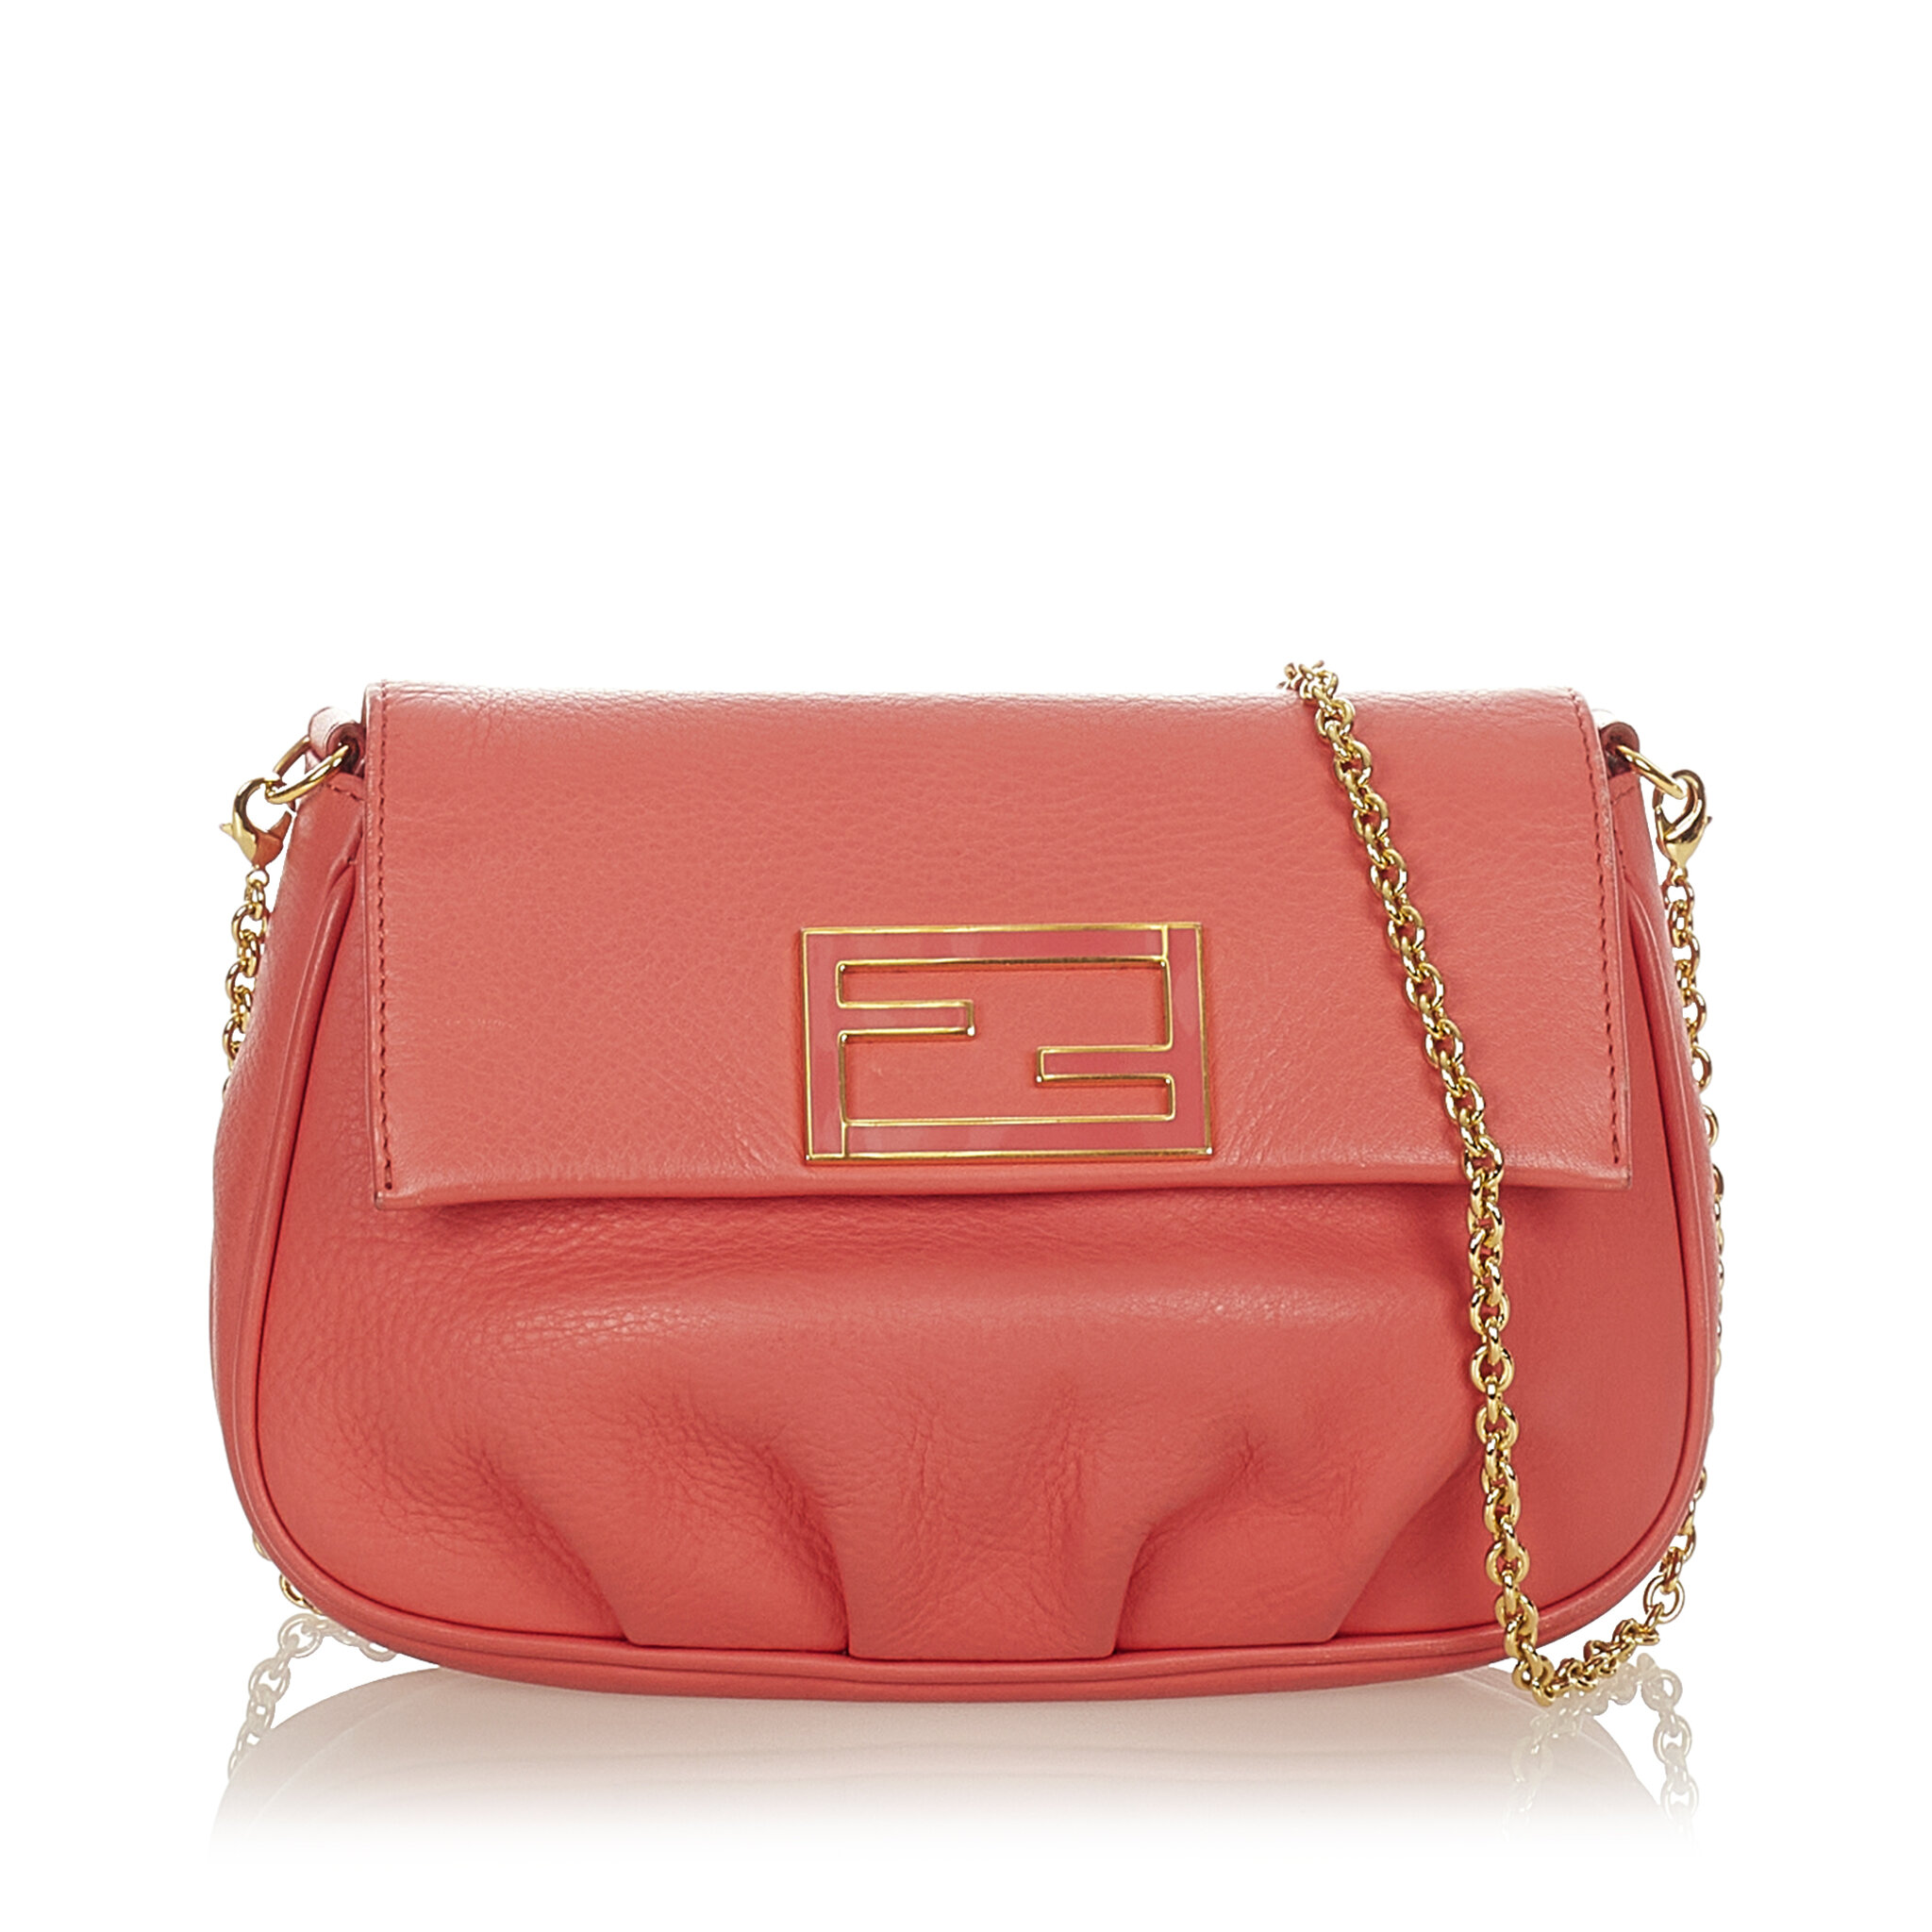 Fendi Fendista Leather Crossbody Bag, ONESIZE, pink